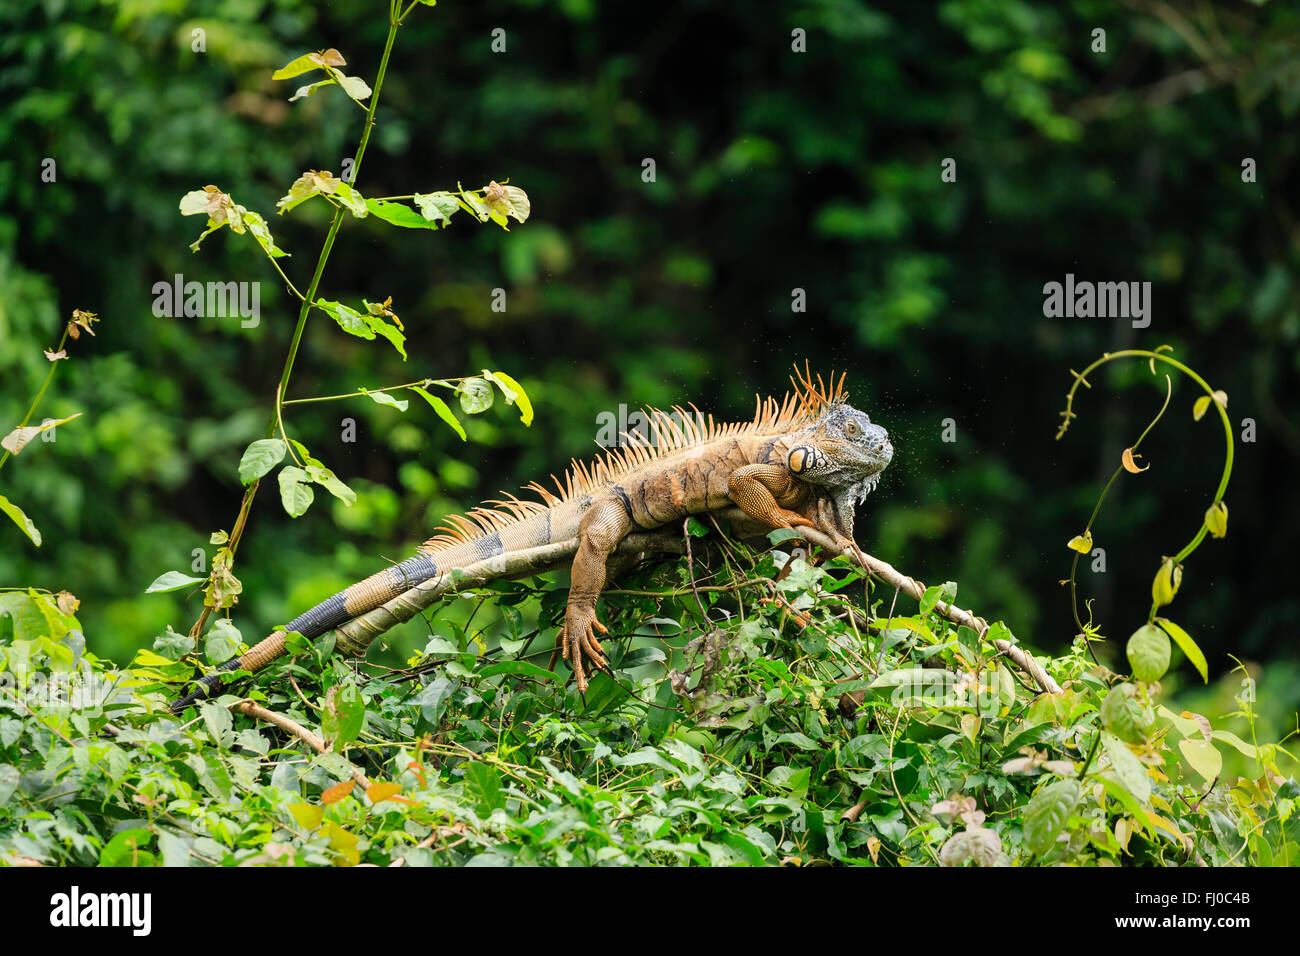 Male green iguana, Iguana iguana, crawls in sunlight on tree branch in rainforest Stock Photo